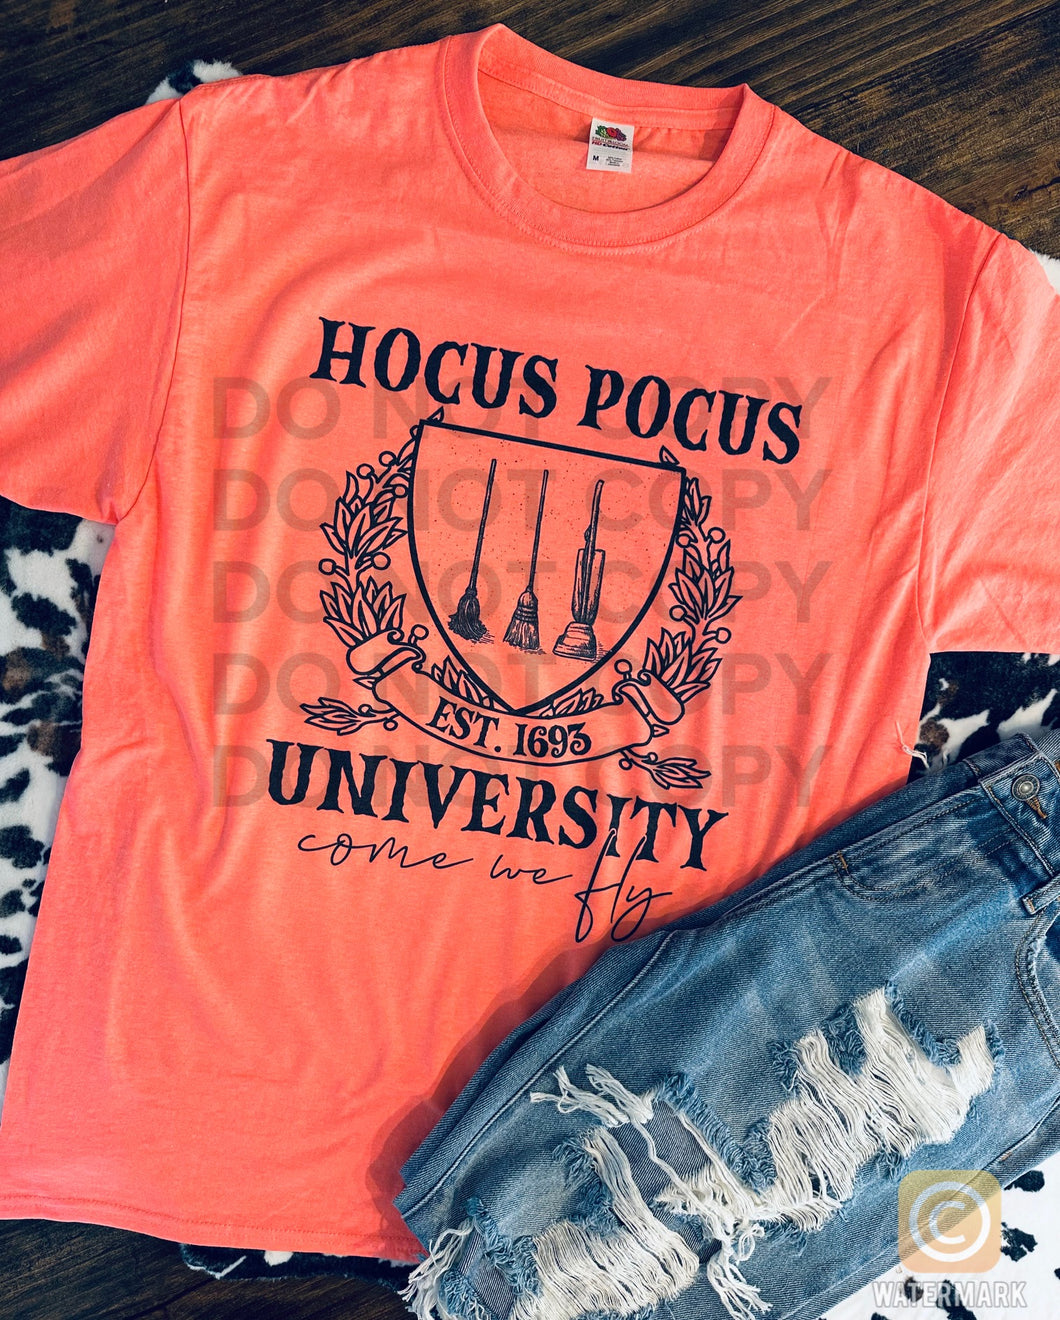 Hocus Pocus University Est. 1693 come we fly graphic tee or sweatshirt graphic tee or sweatshirt graphic tee or sweatshirt - Mavictoria Designs Hot Press Express